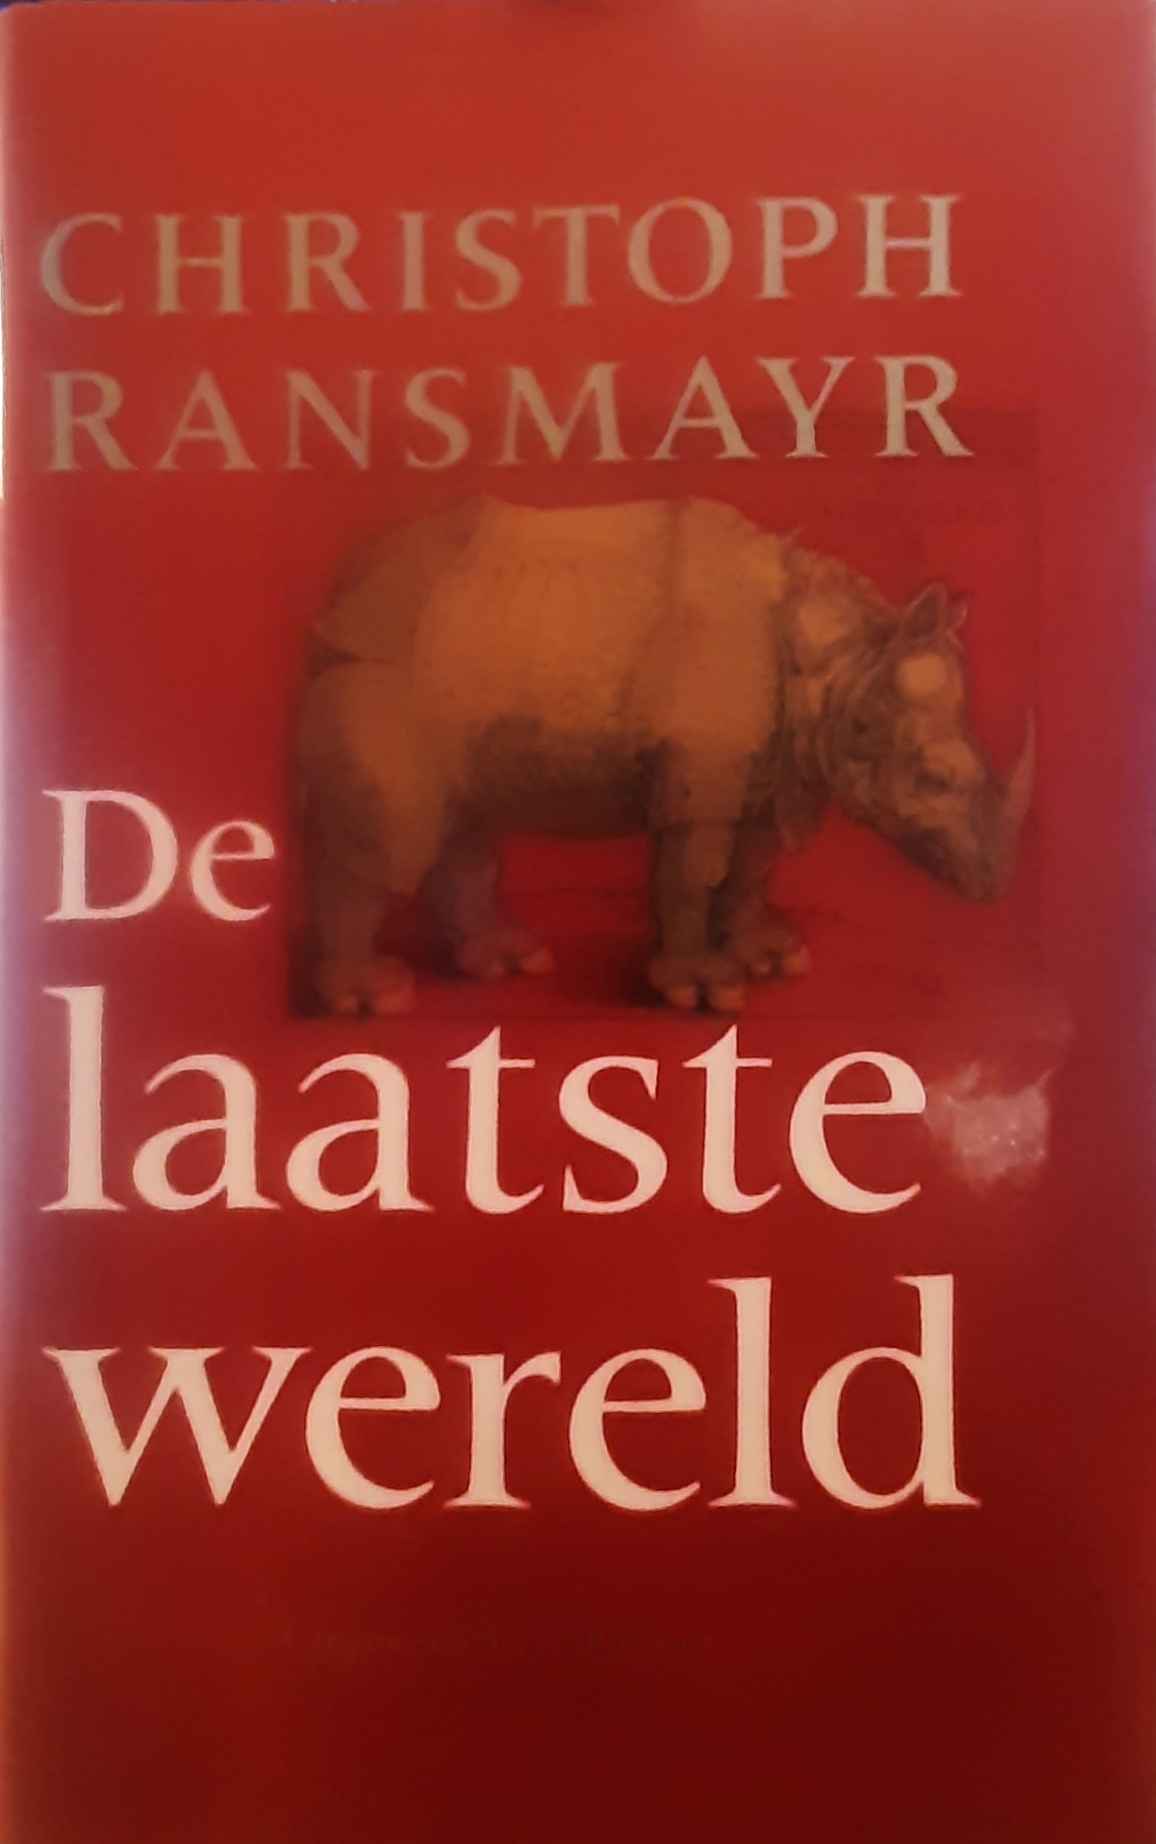 Book cover 202108242146: RANSMAYR Christoph | De laatste wereld - roman (vertalinbg van Die letzte Welt - 1988)